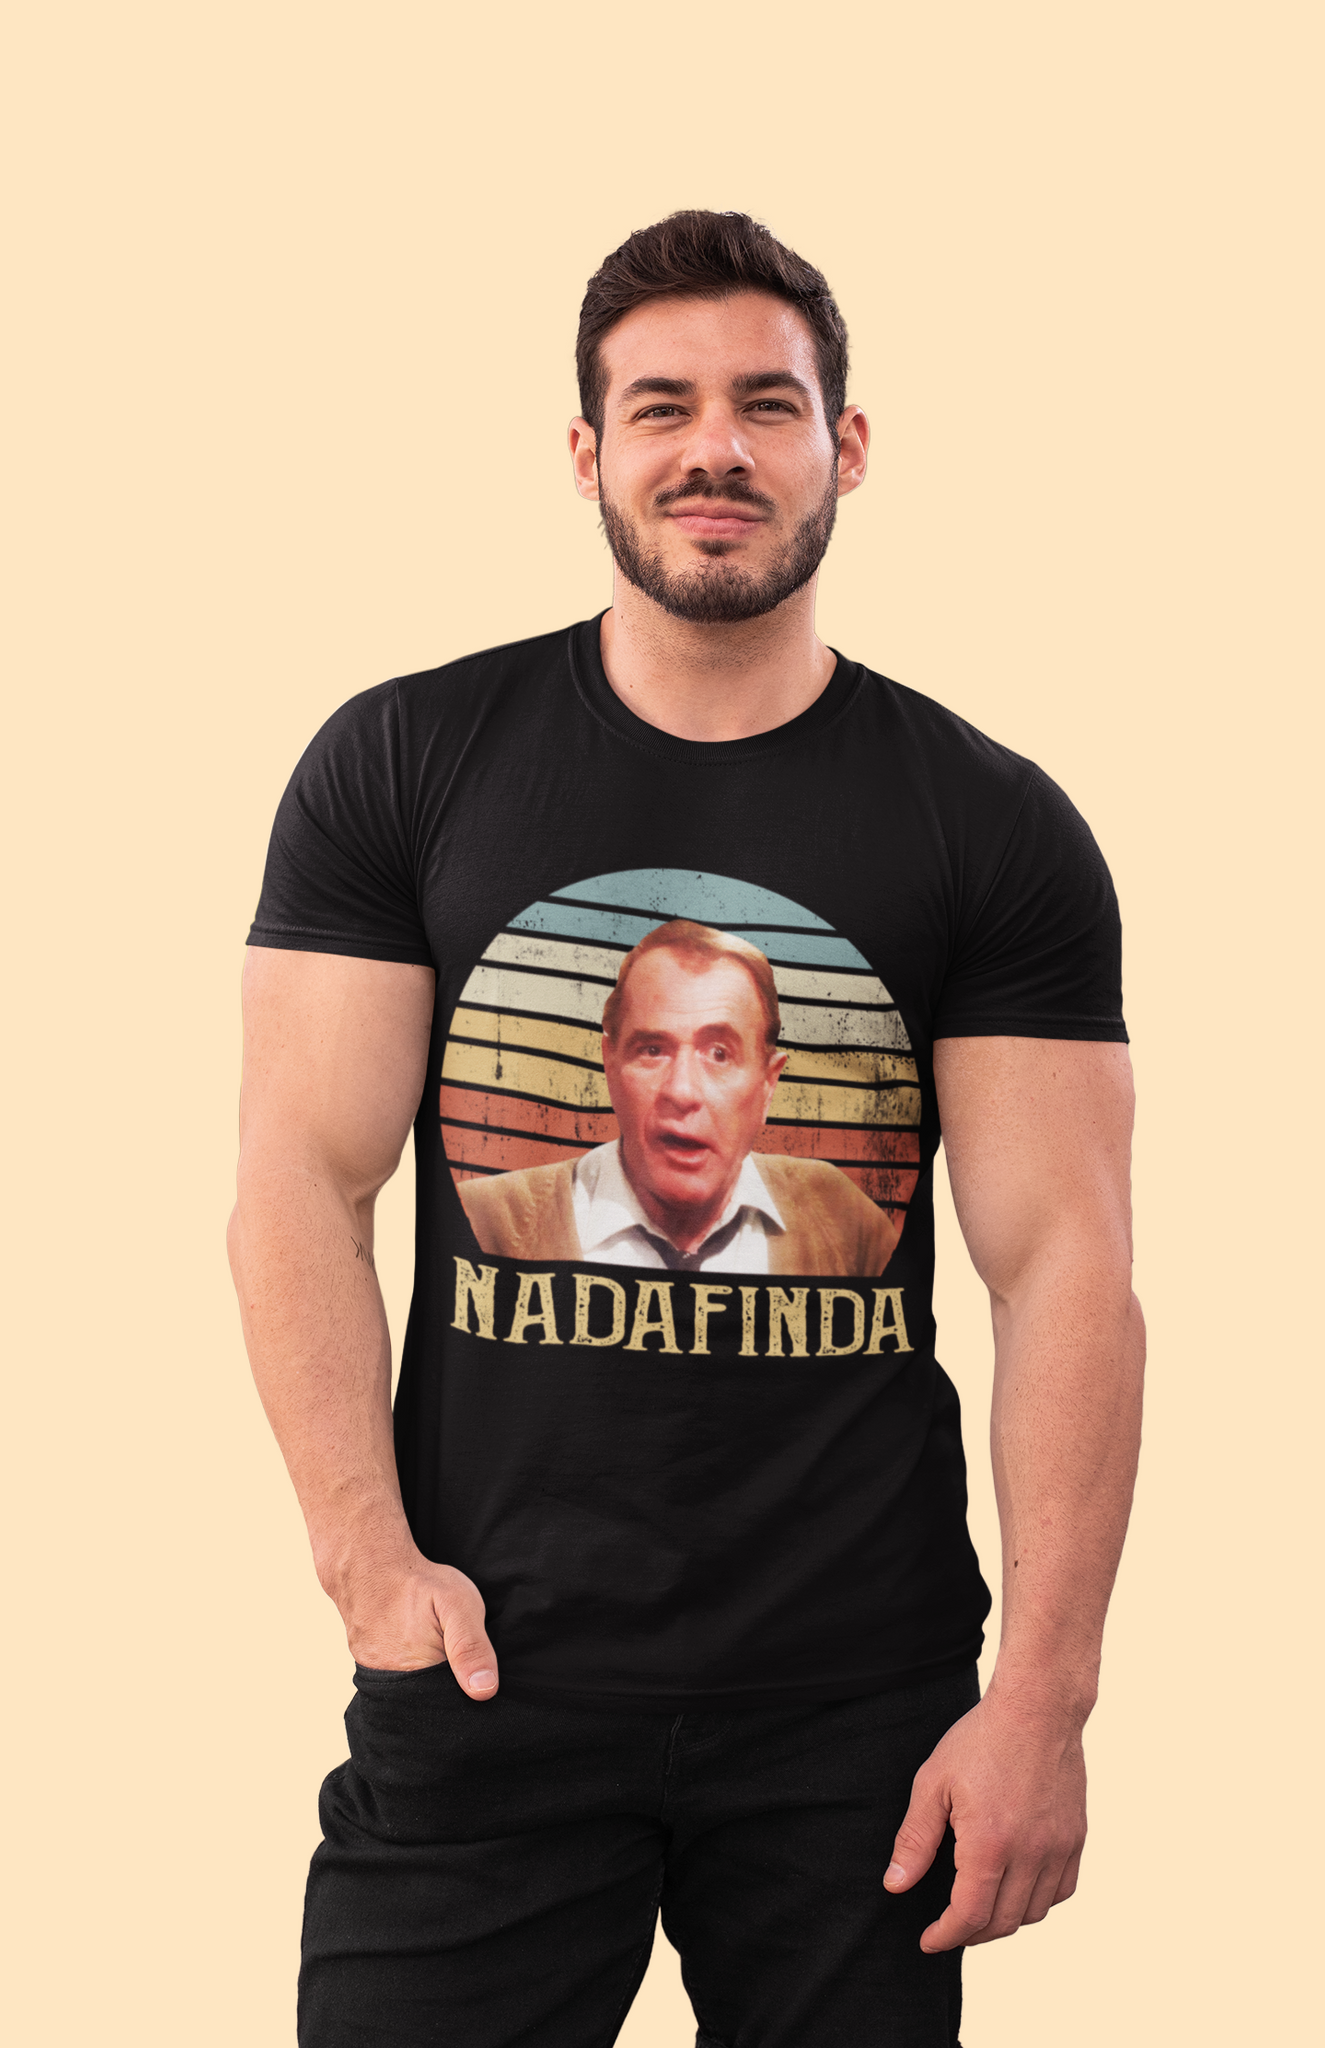 A Christmas Story T Shirt, The Old Man T Shirt, Naddafinga Tshirt